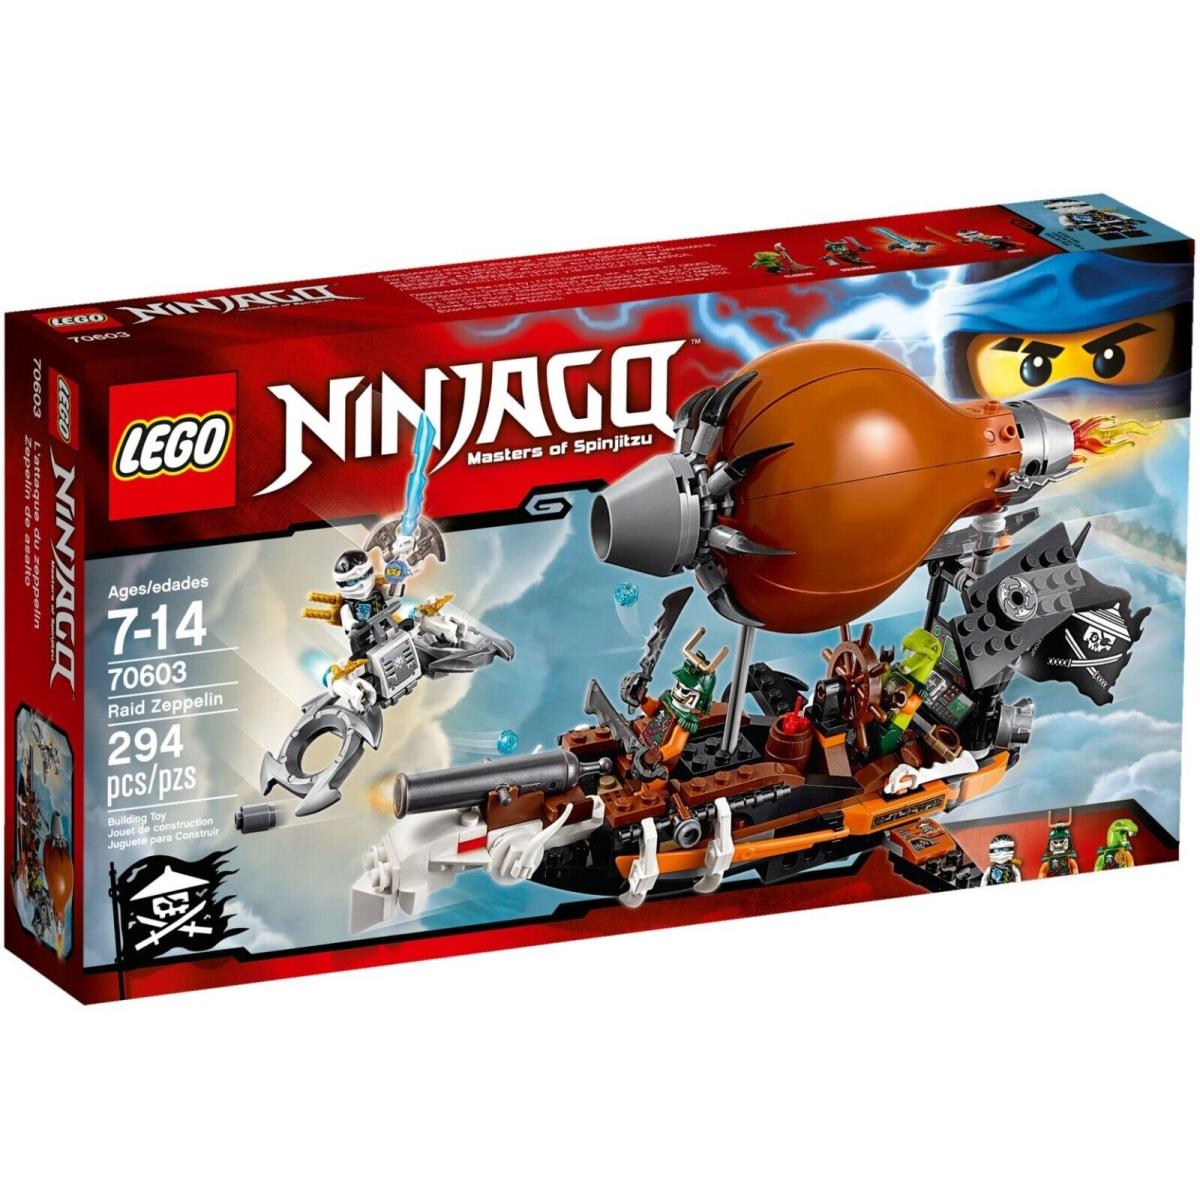 Lego Ninjago Raid Zeppelin Set 70603 Masters of Spinjitzu 294 Pieces